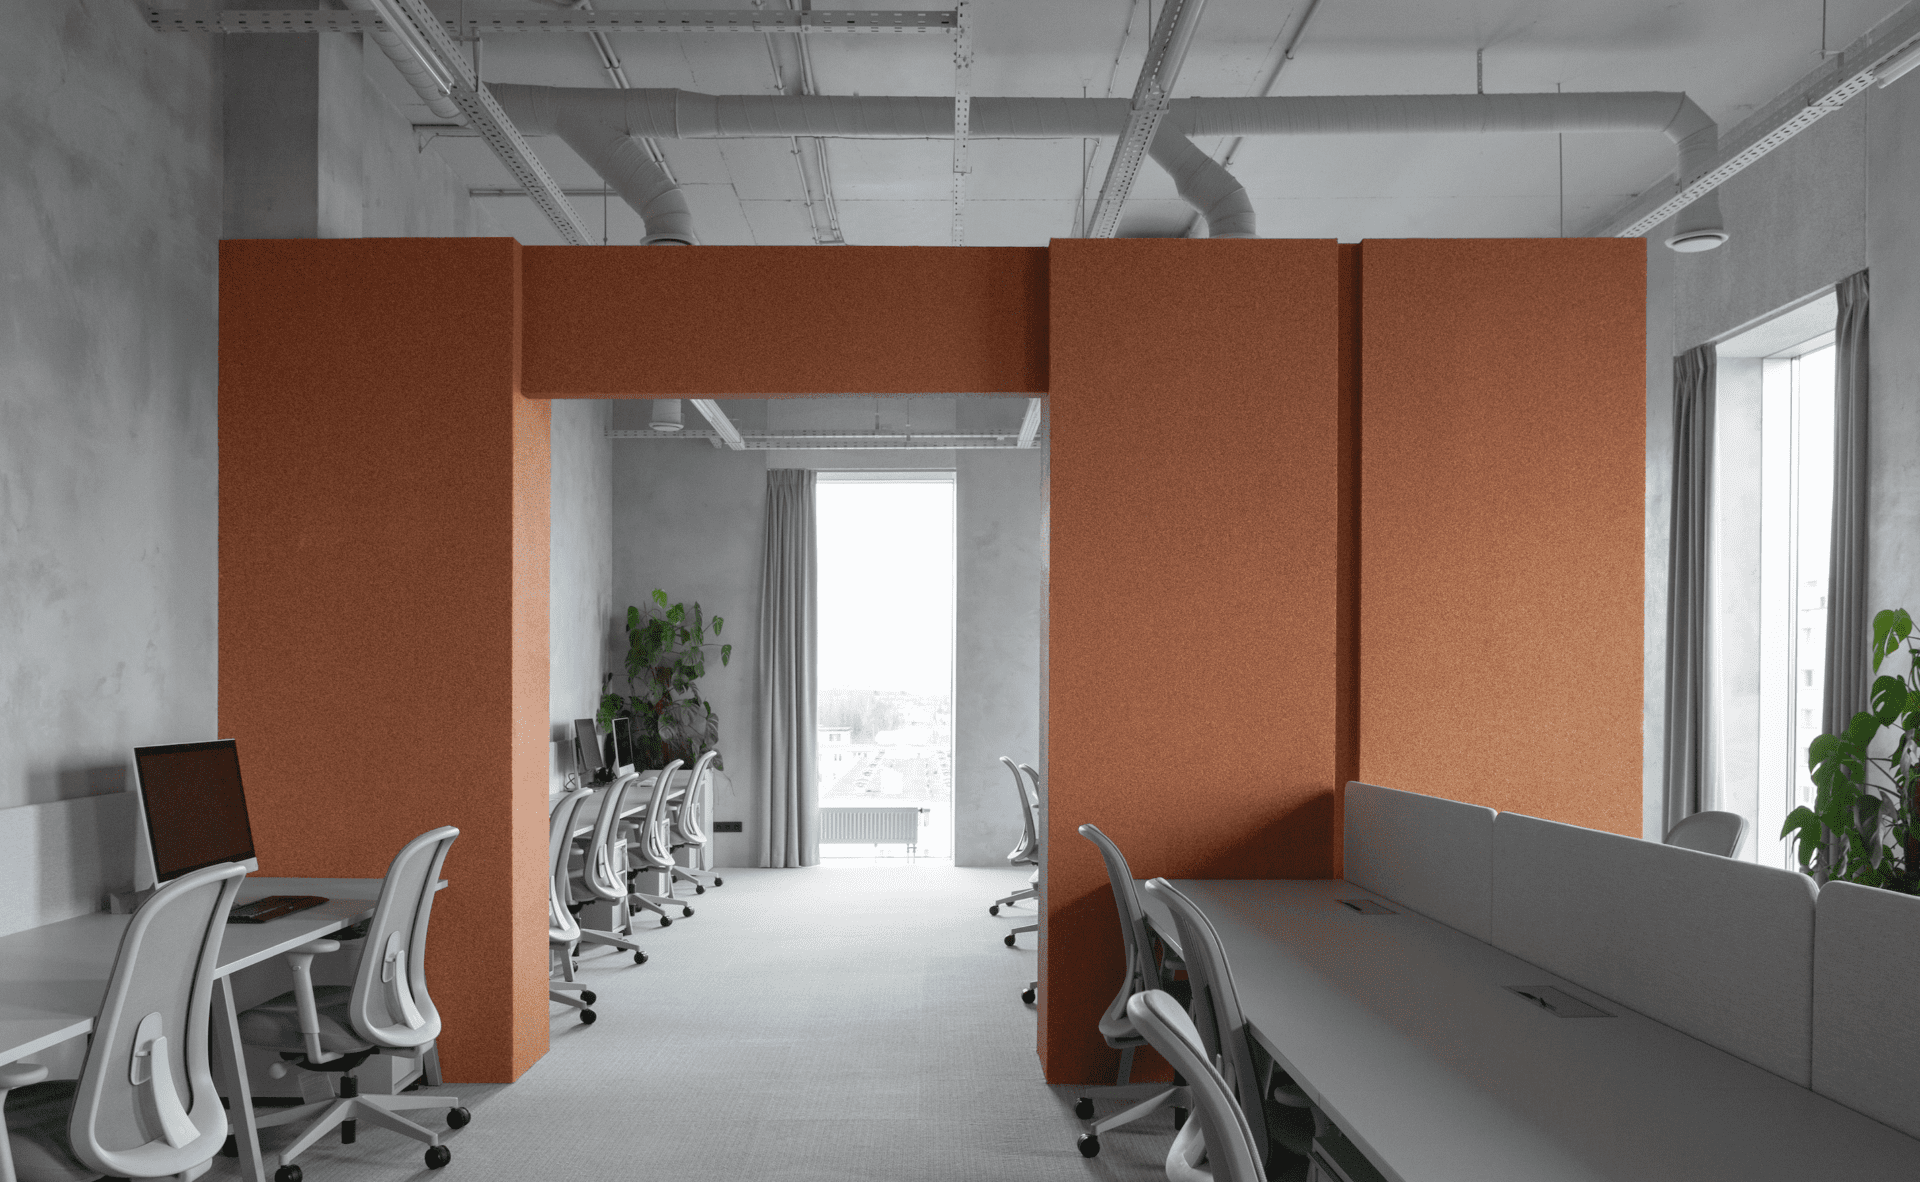 Kotra Architects designs Minsk office interior as concrete box